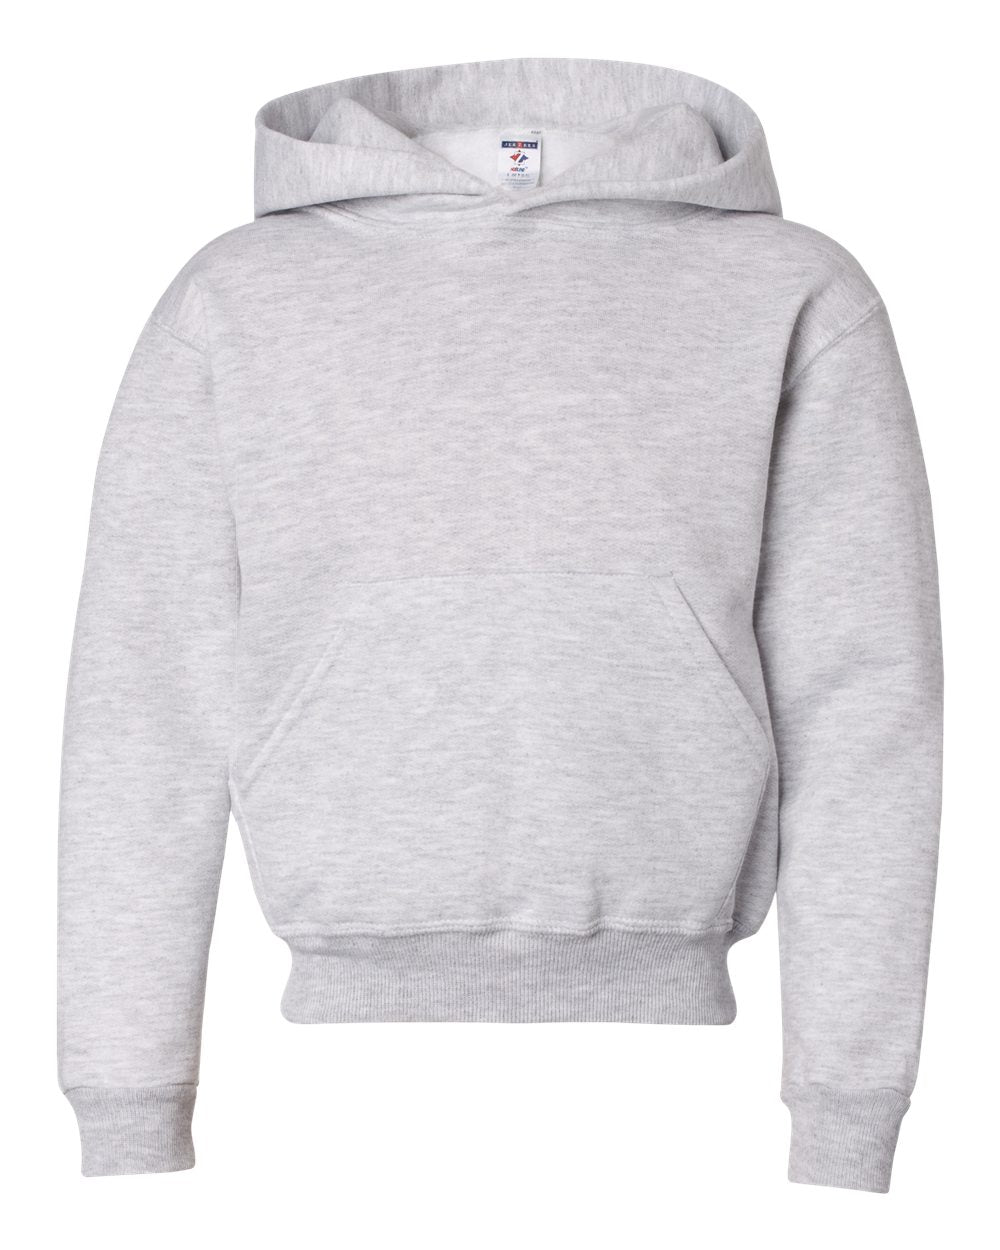 JERZEES - NuBlend® Youth Hooded Sweatshirt - 996YR. S - XL